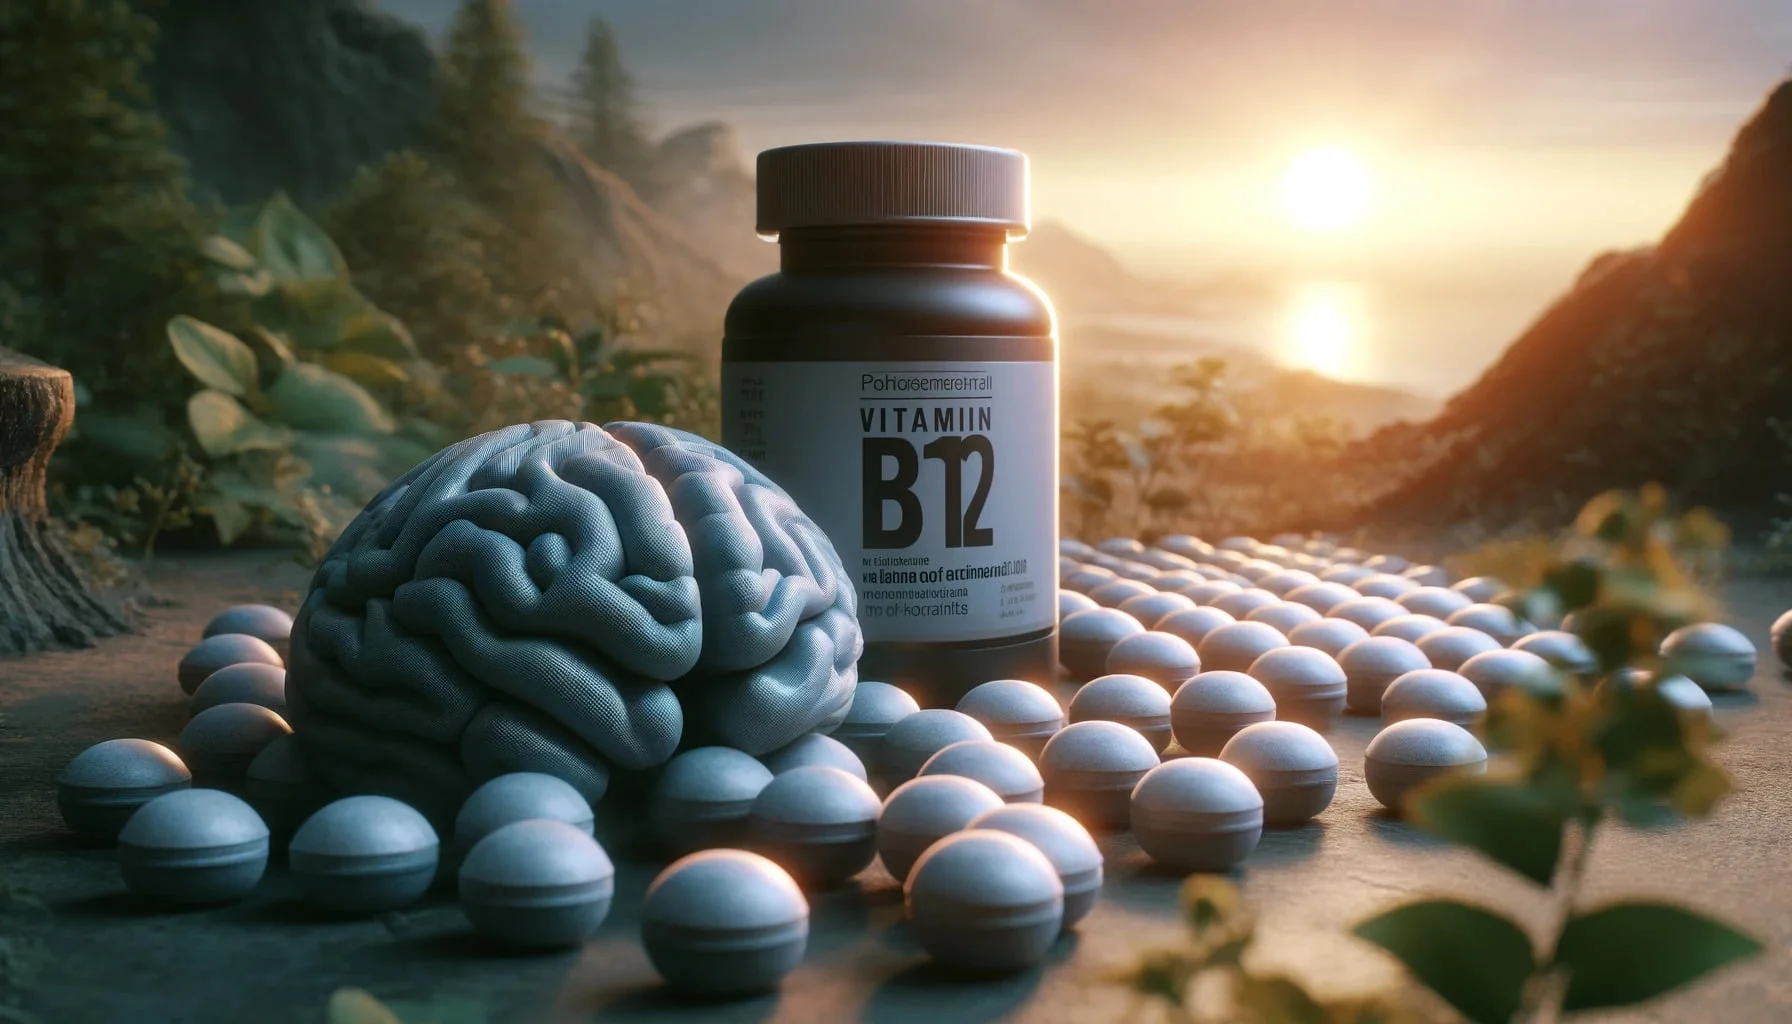 A photorealistic image of vitamin b12 supplmenet next to a brain.